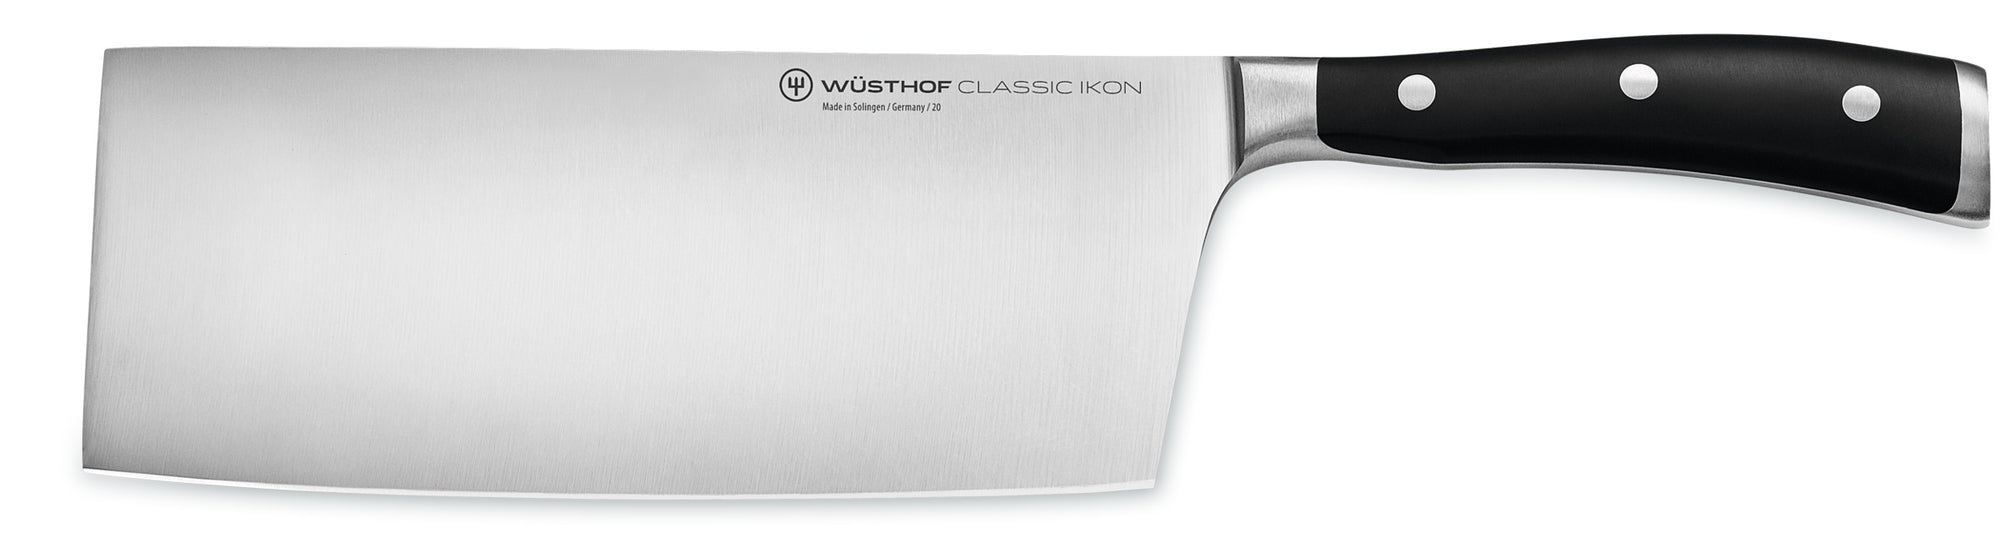 Wusthof Classic IKON Chinese Cleaver Chef Knife 4673 1040331818 Canada